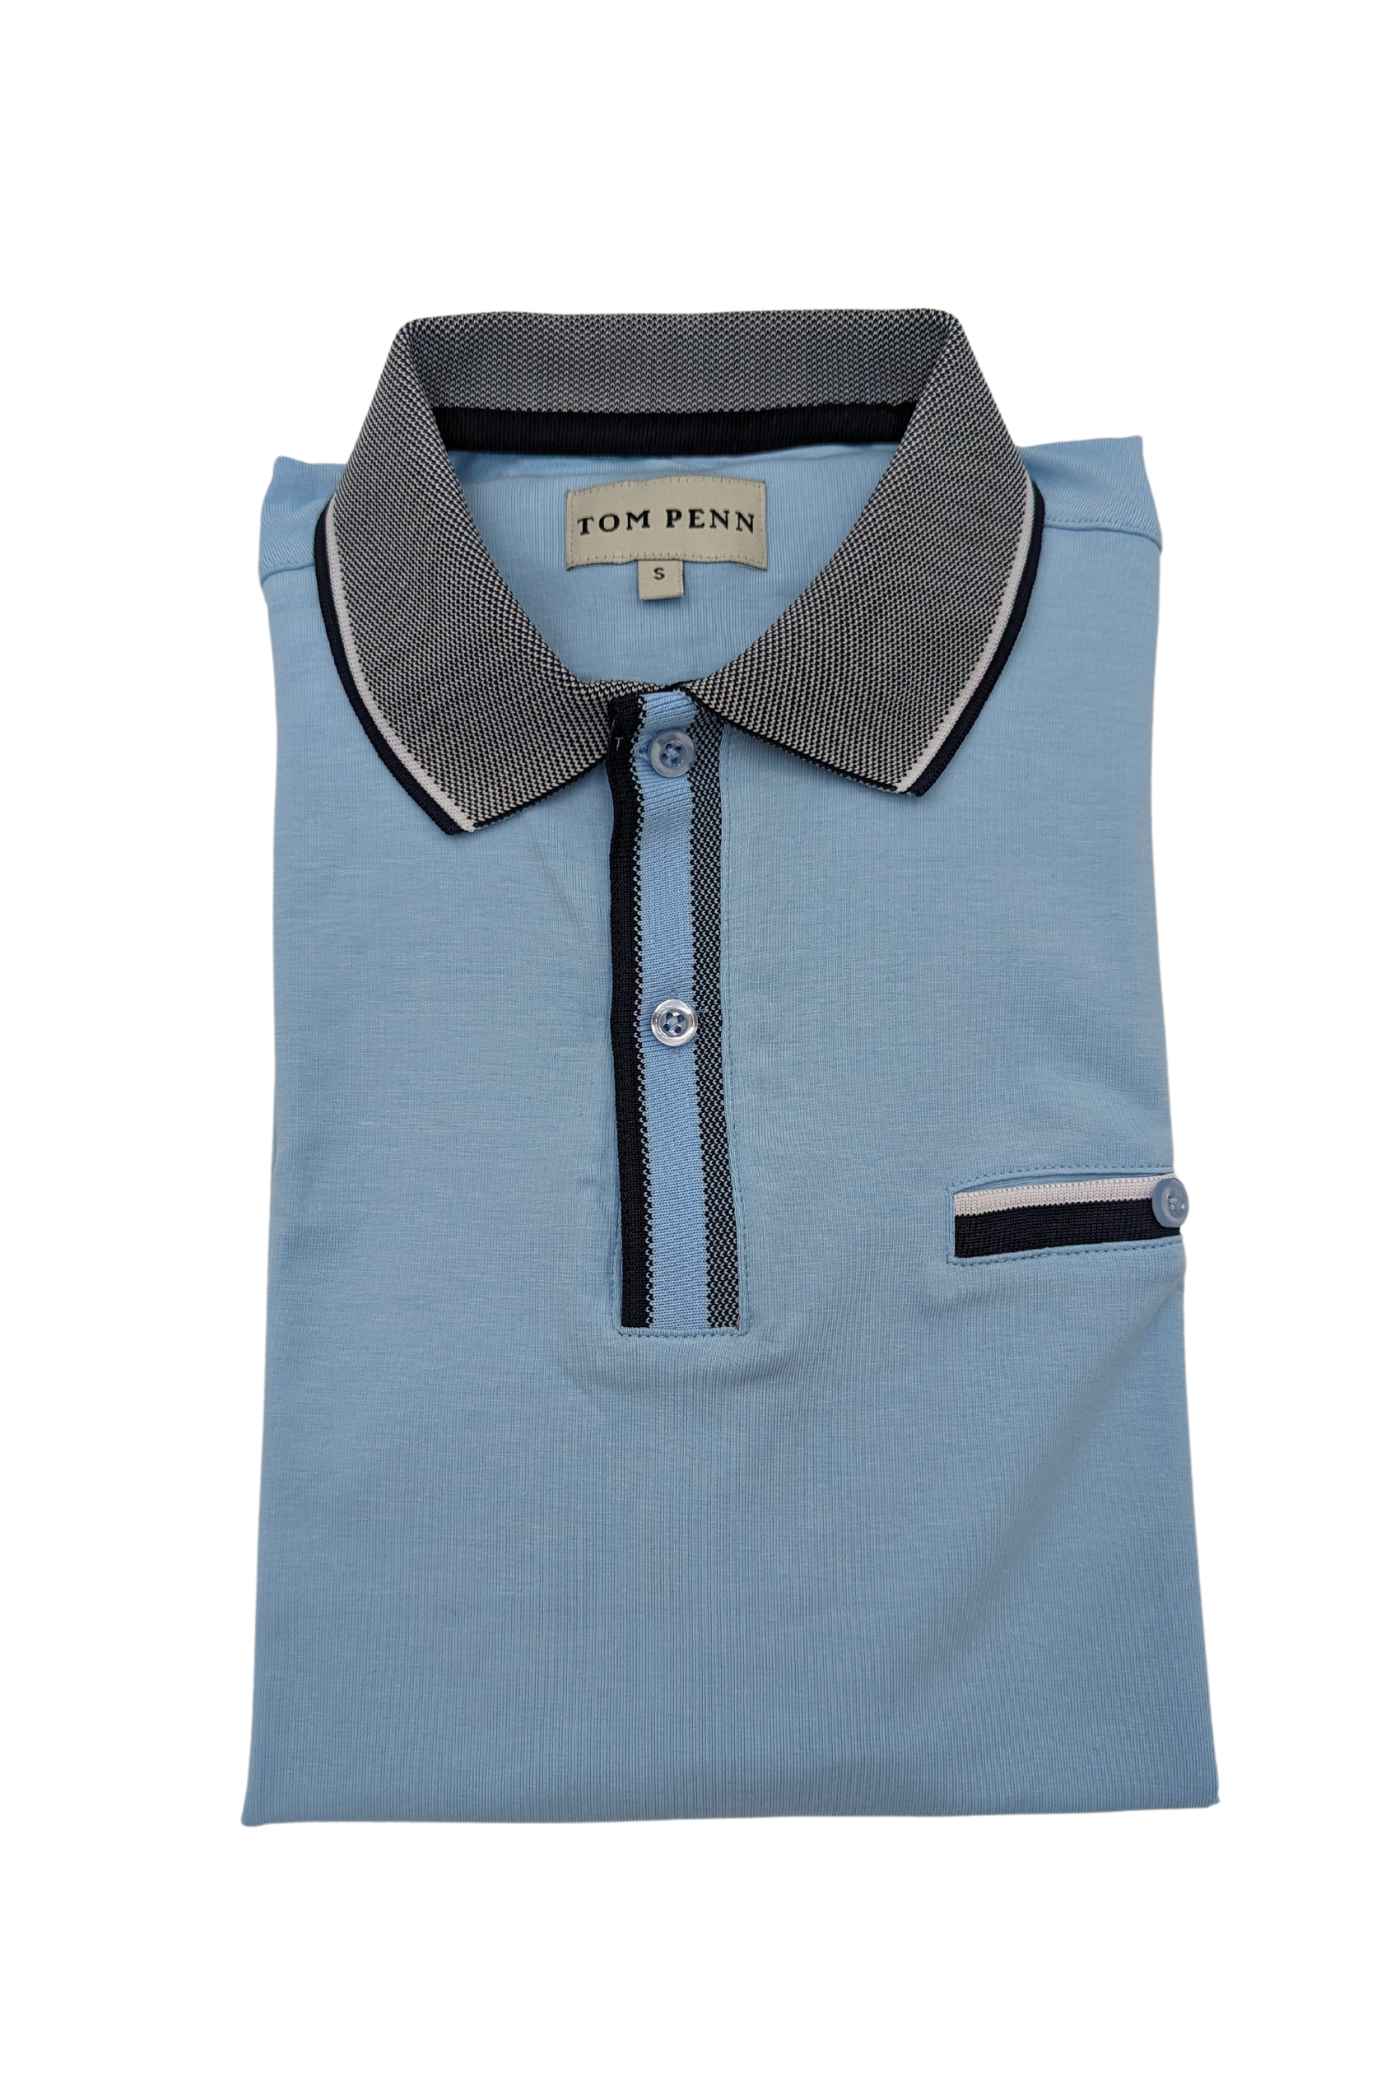 Tom Penn Sky Polo Shirt